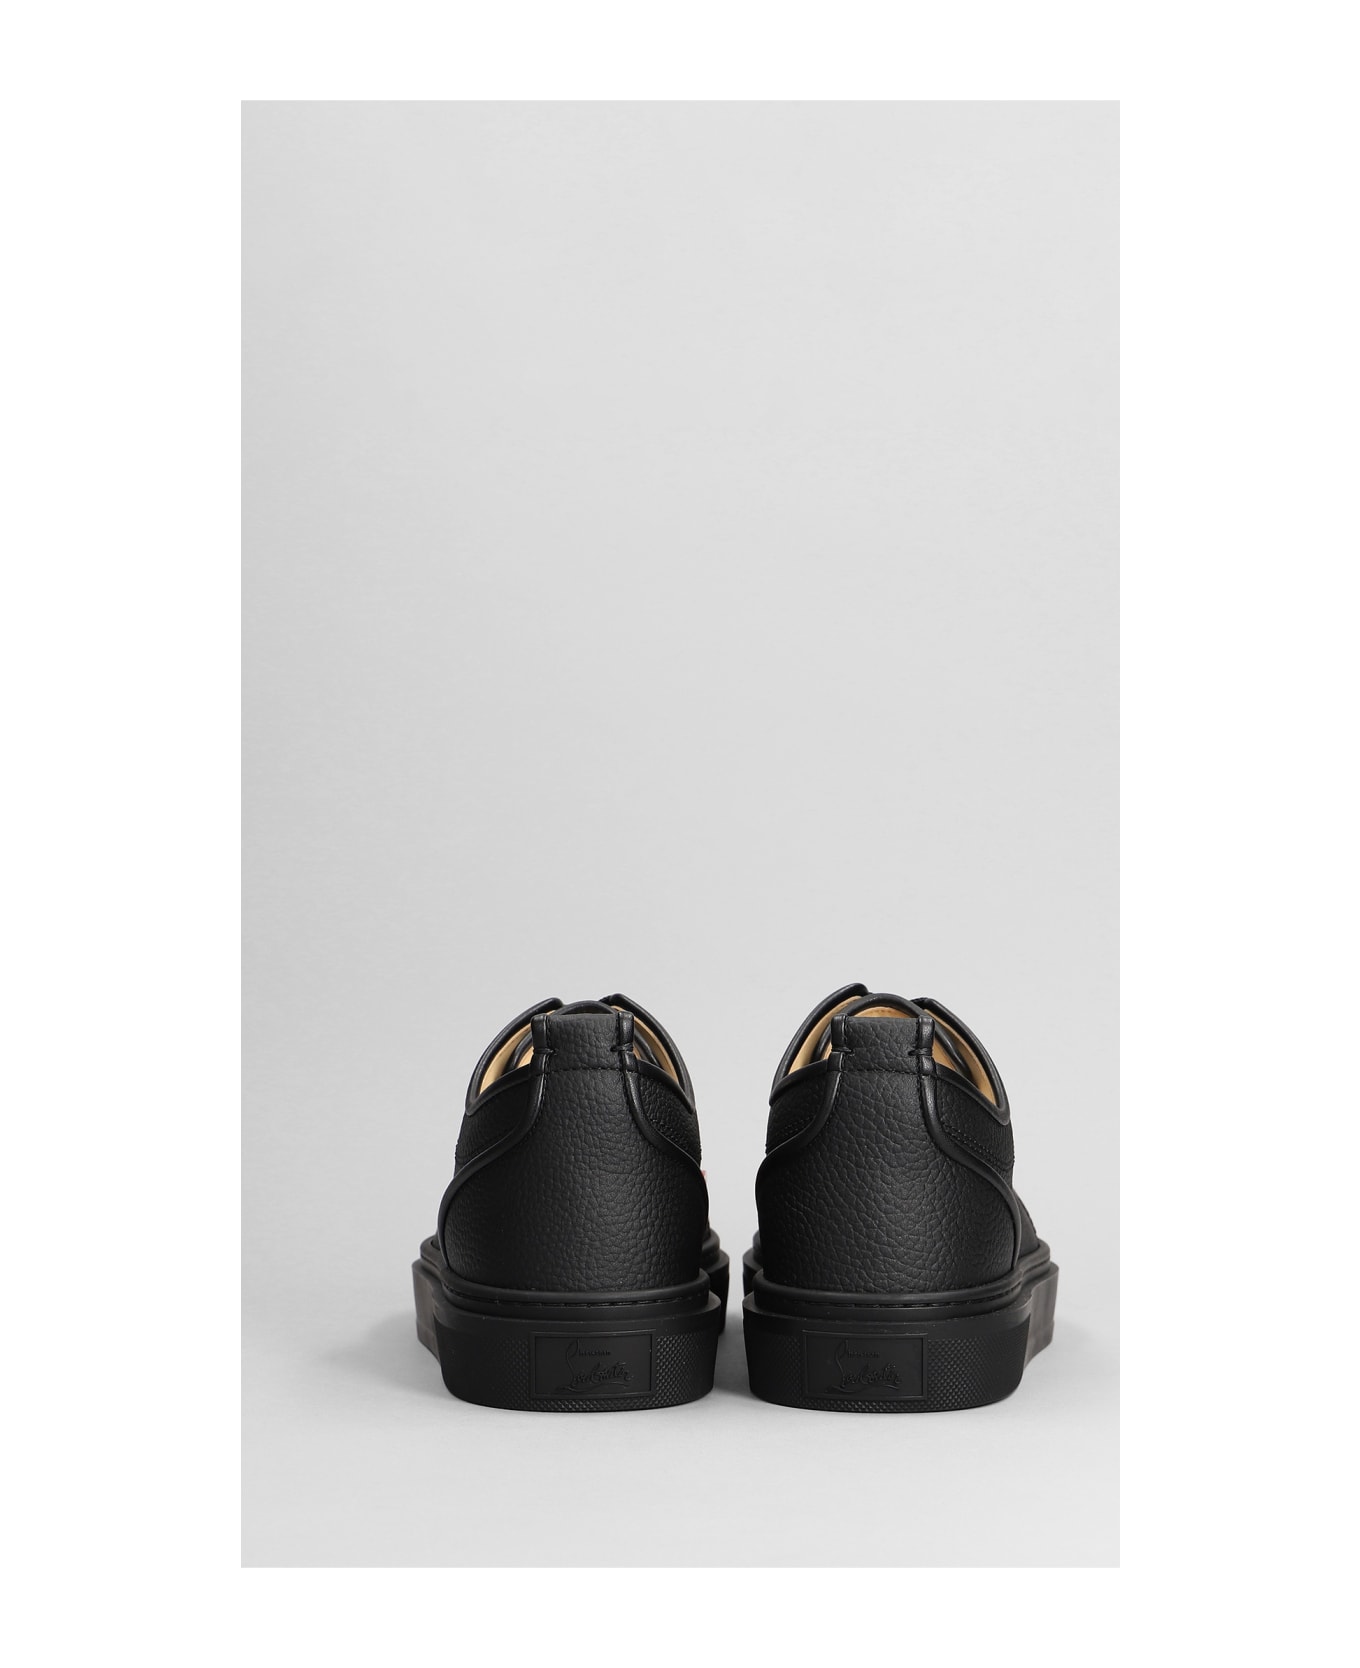 Christian Louboutin Adolon Junior Sneakers In Black Leather - Black